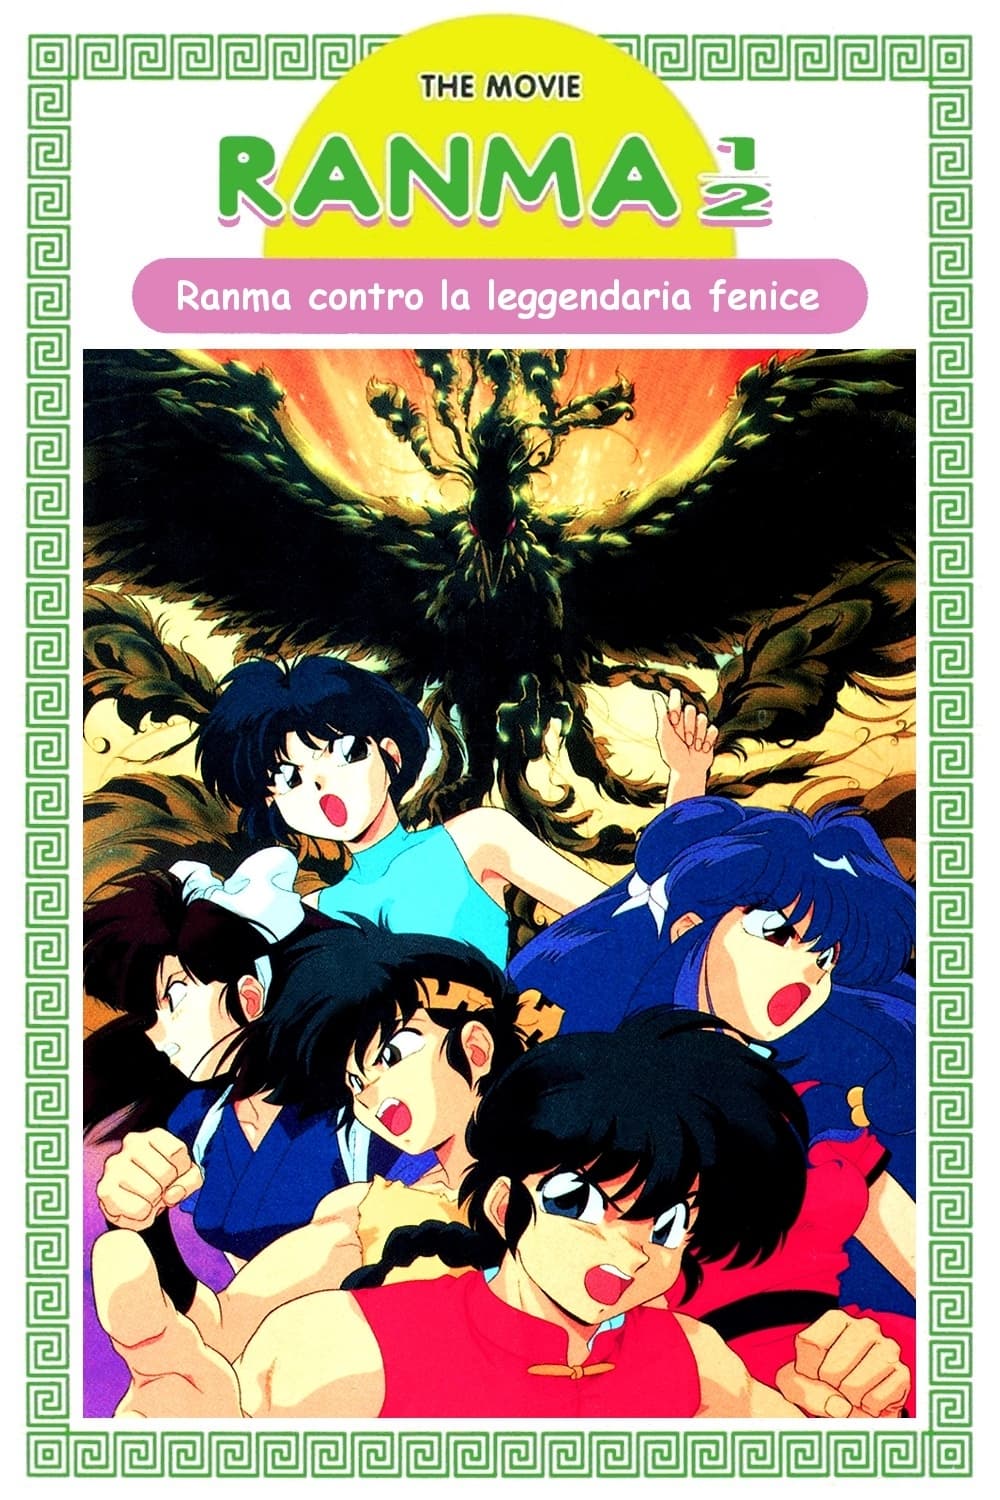 Ranma ½: Ranma contro la leggendaria fenice film